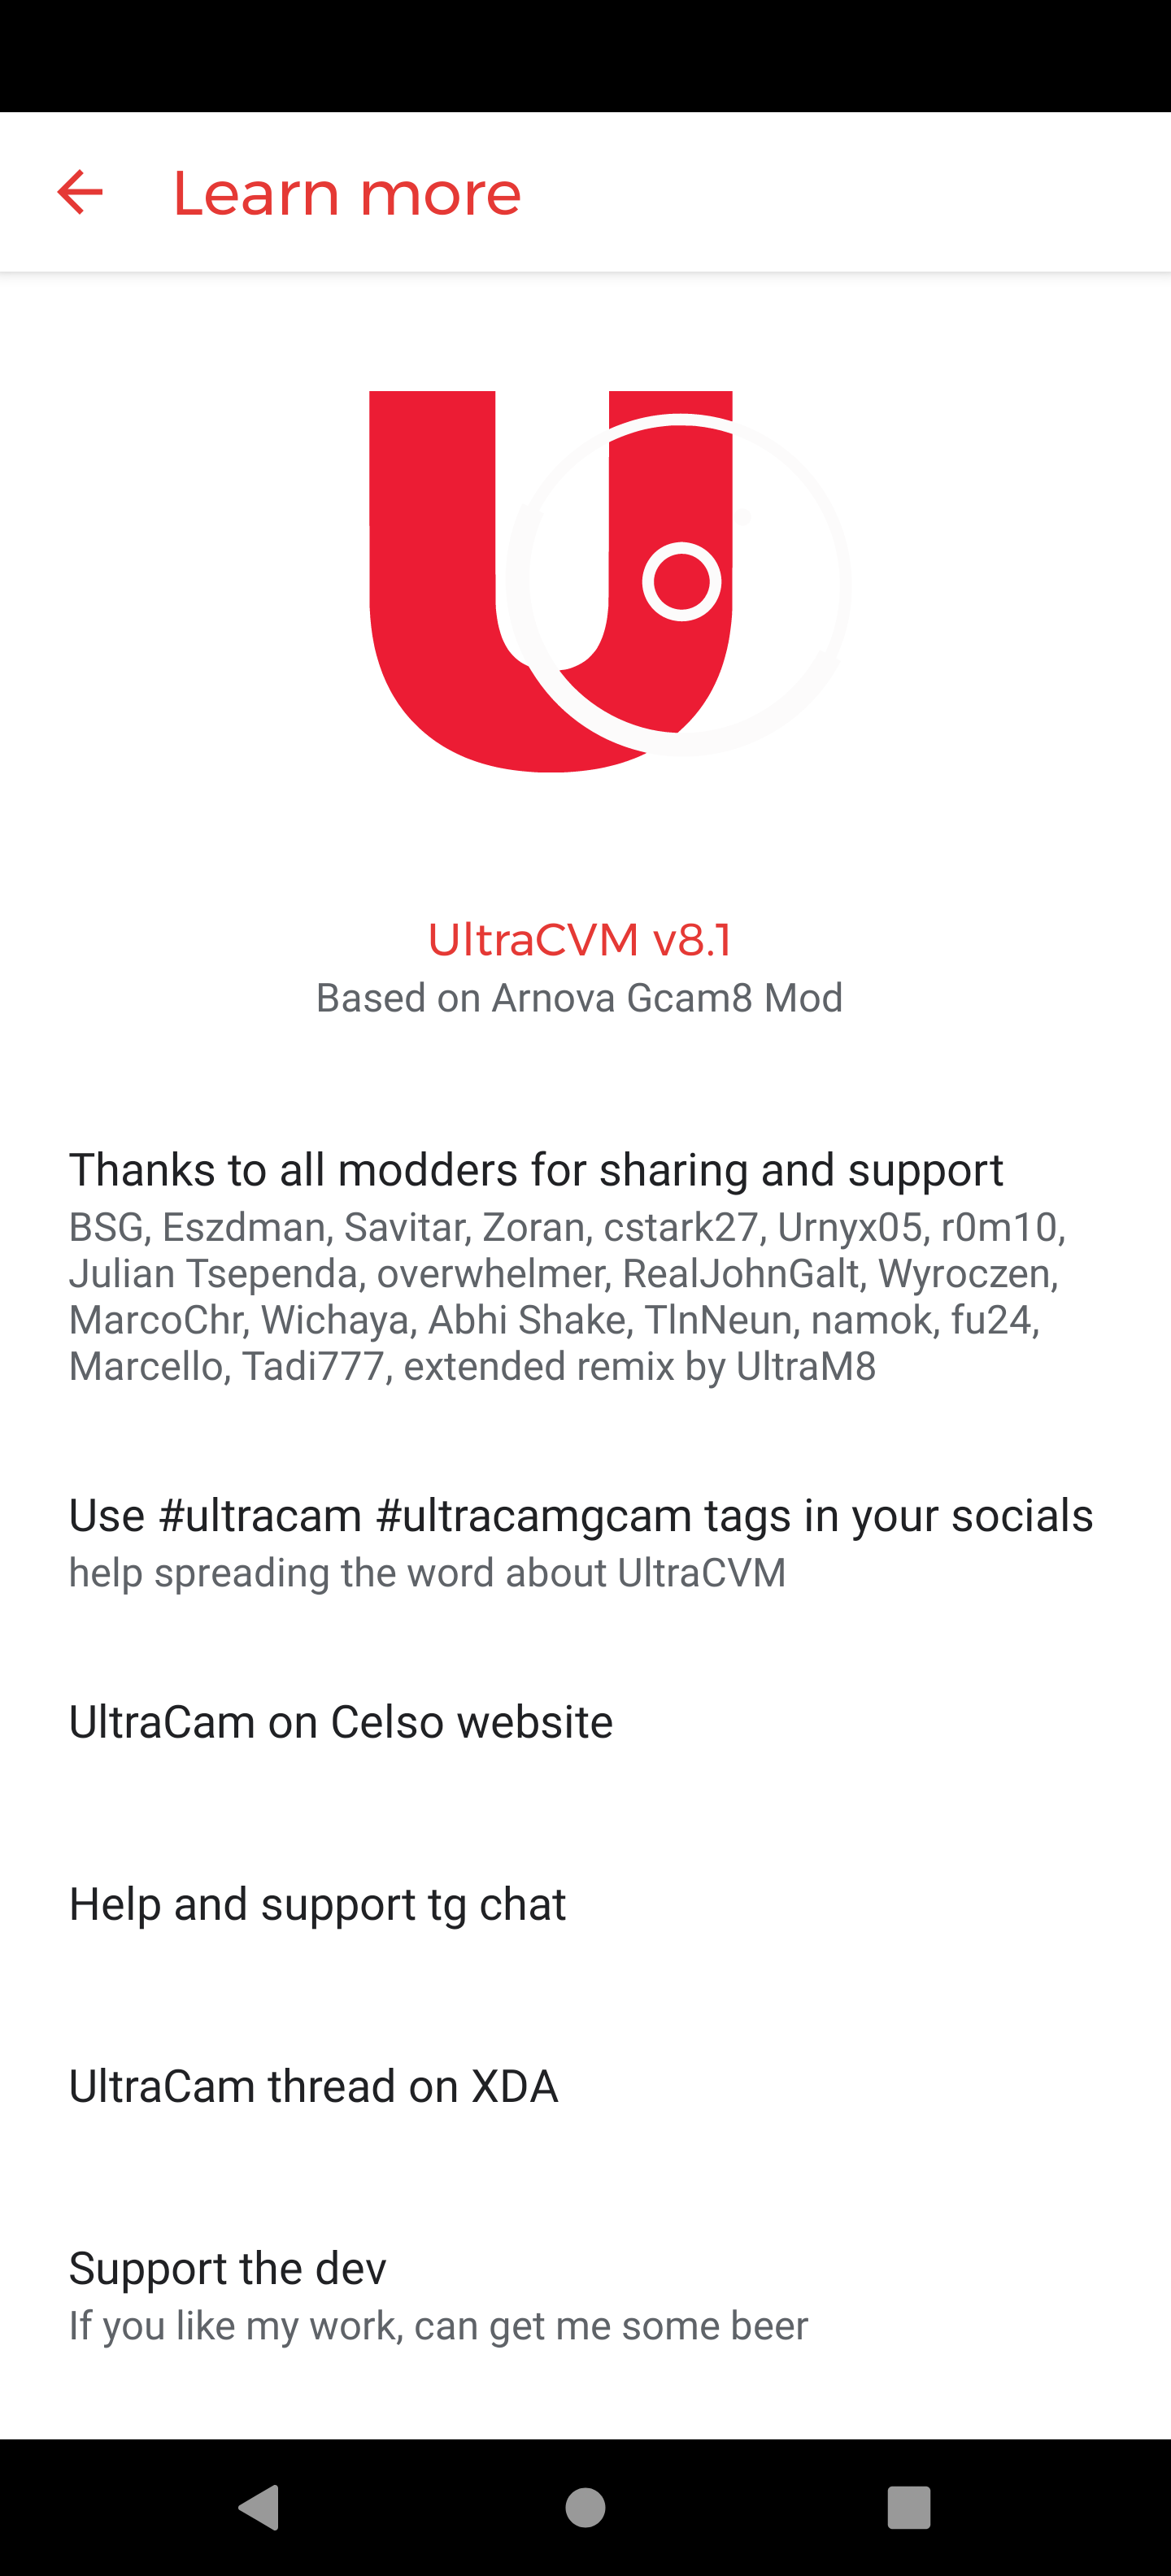 UltraCVM_v8.1 About